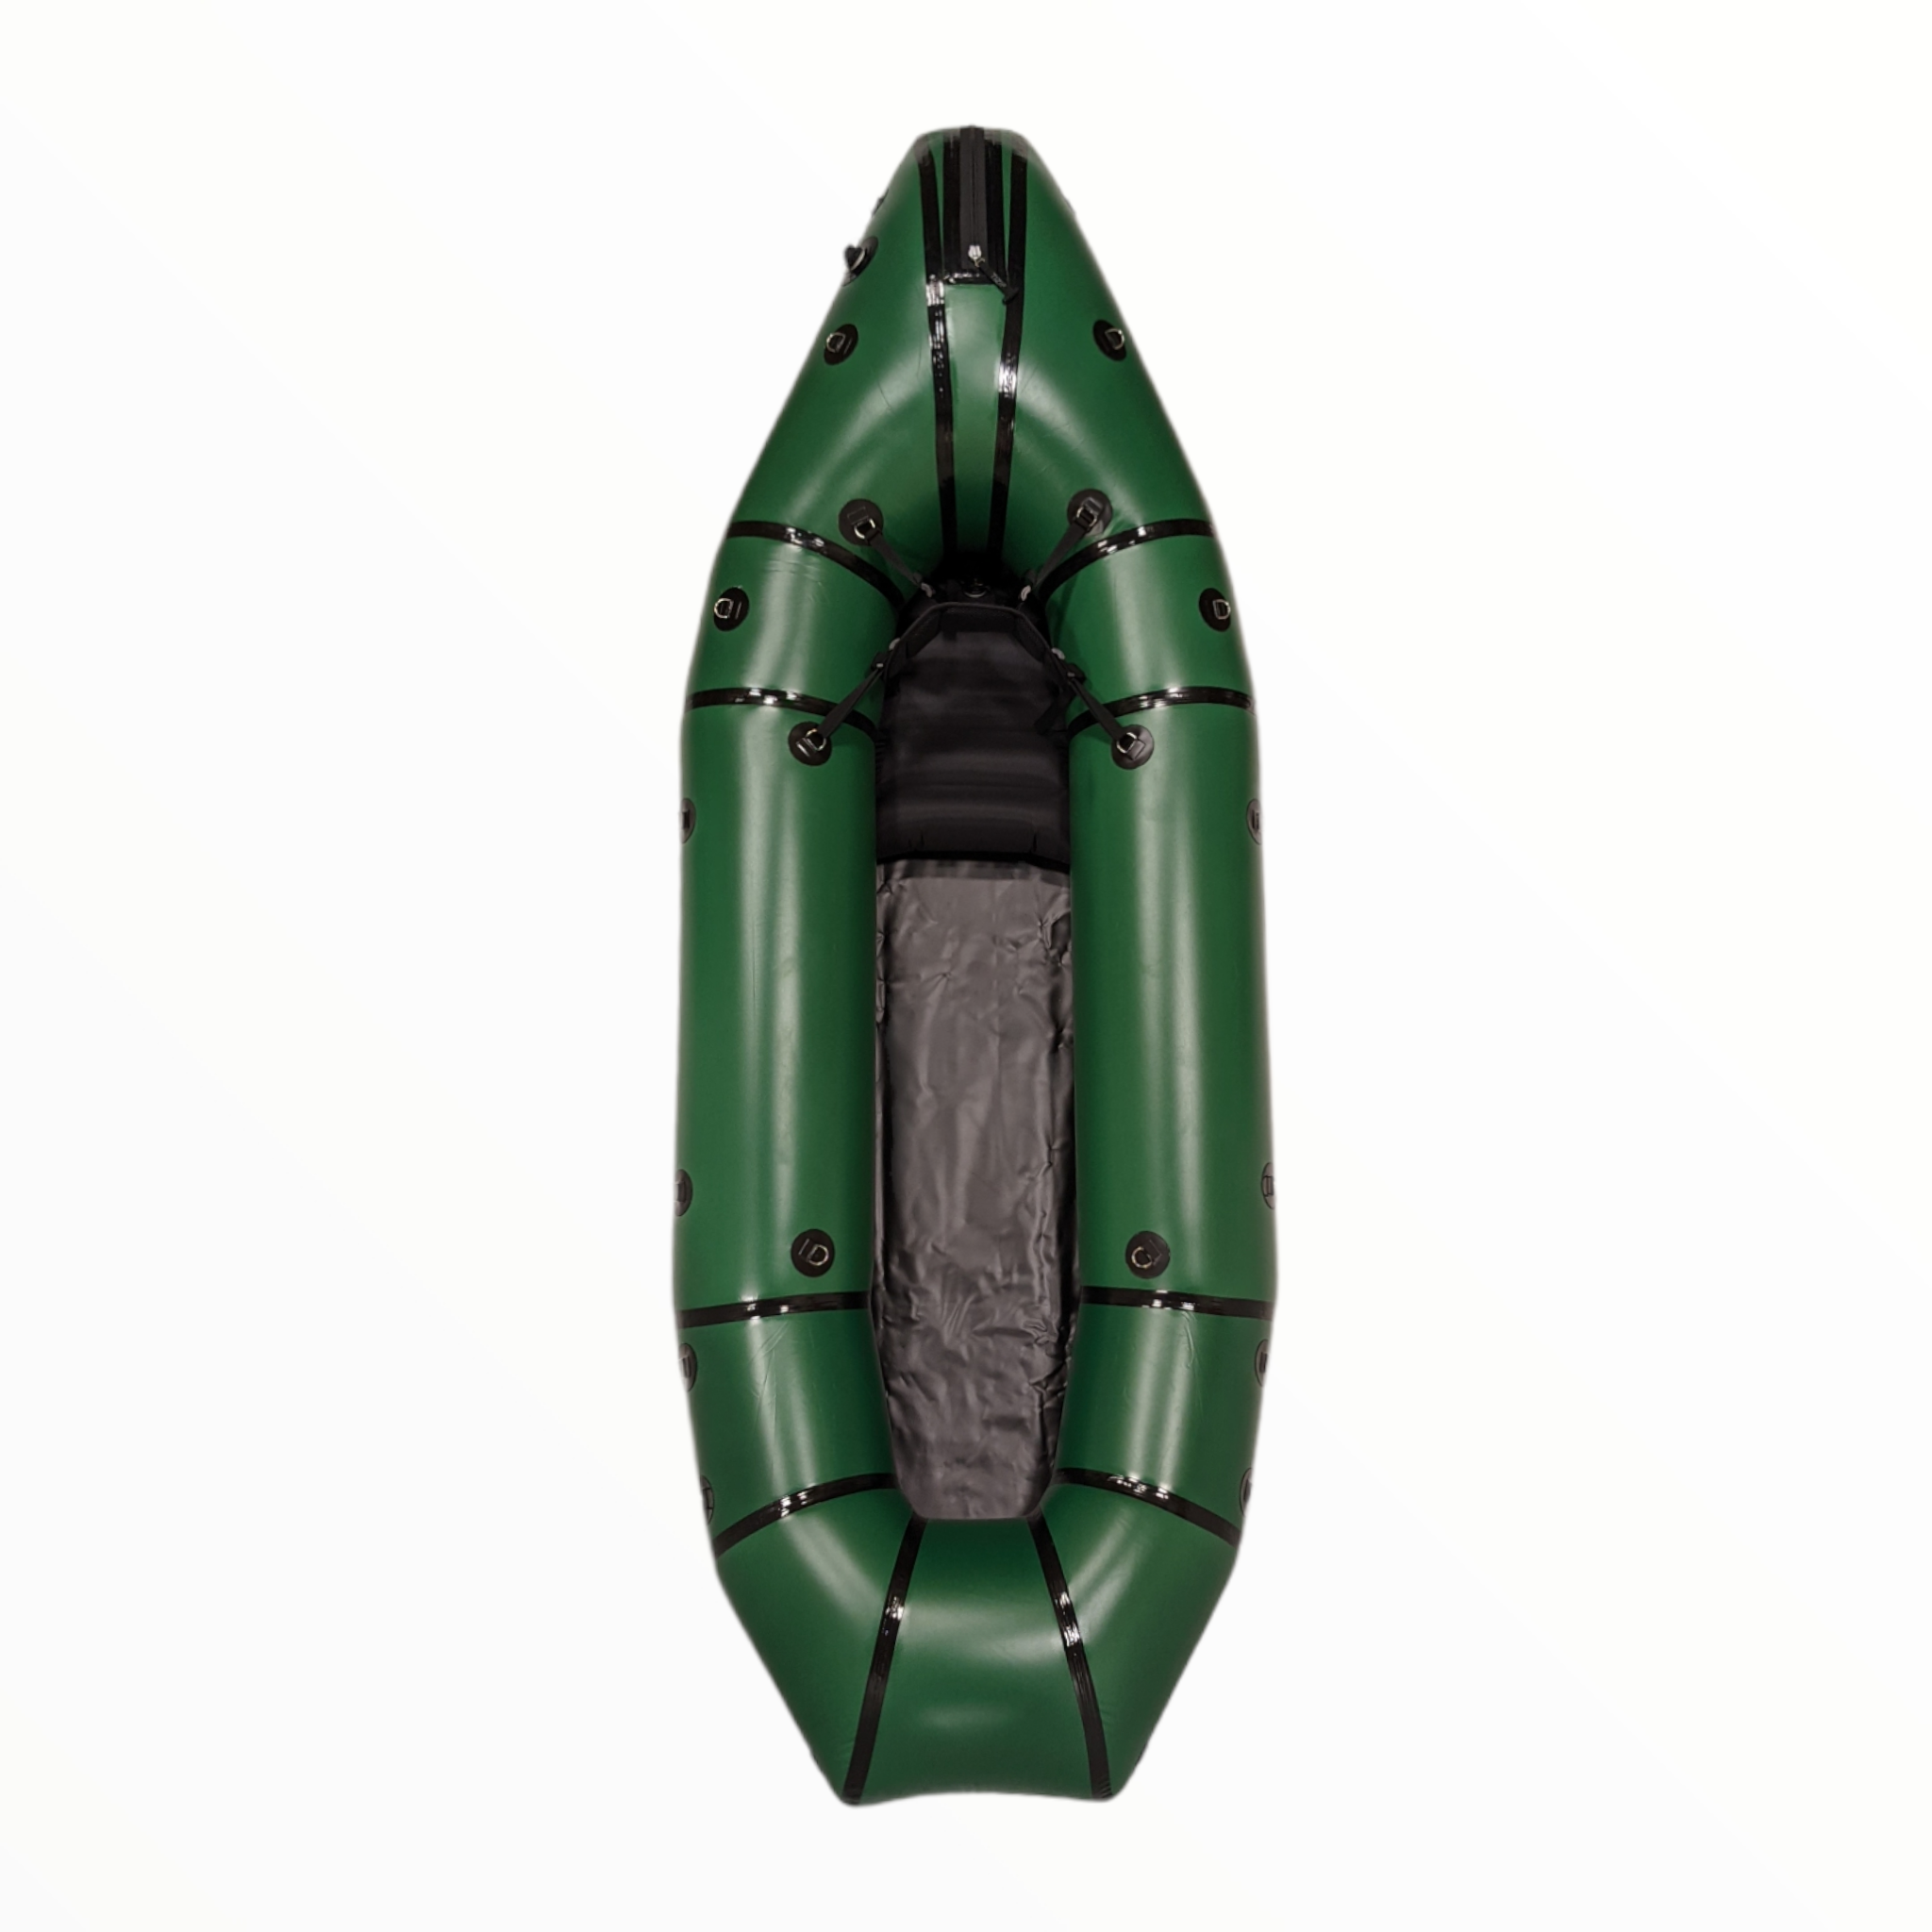 YILI Inflatable Fishing Float Tube with Oar, Seat, UK